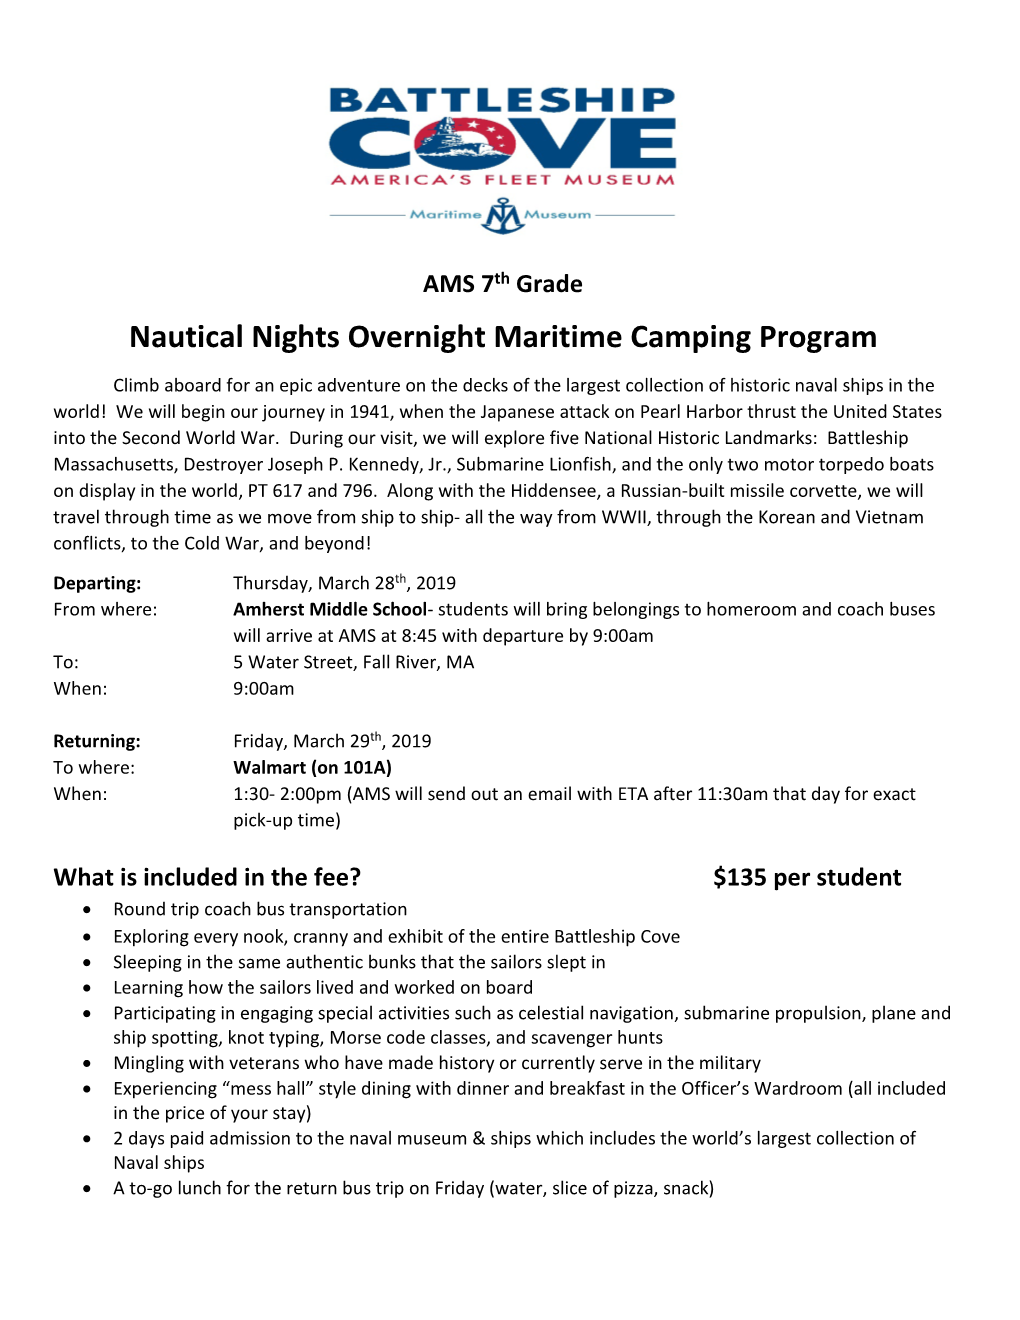 Nautical Nights Overnight Maritime Camping Program